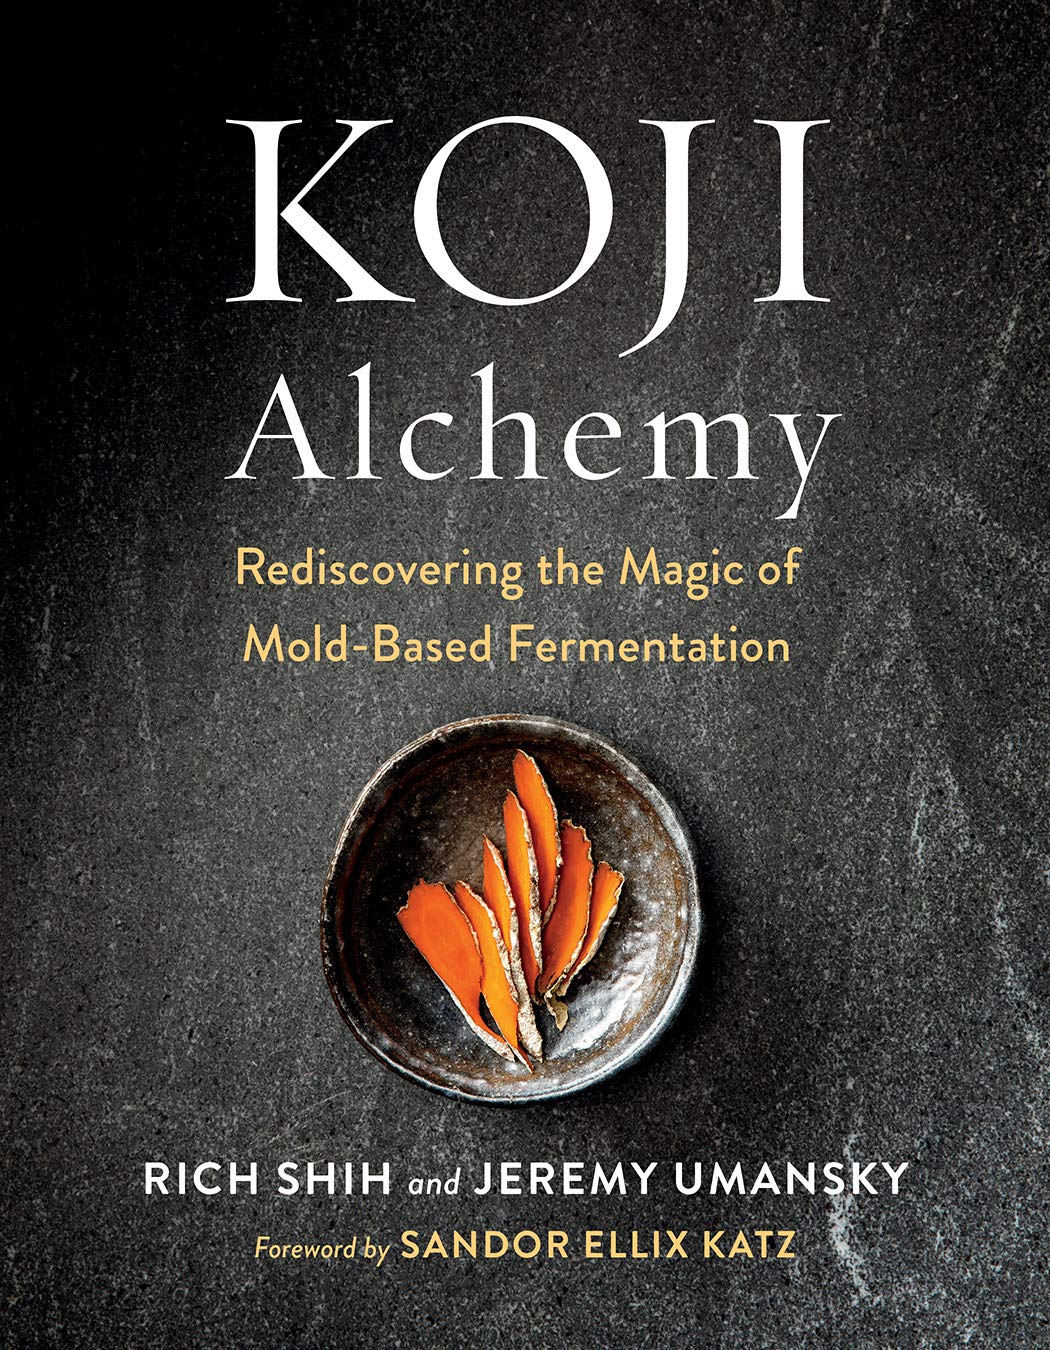 Koji Alchemy: Rediscovering the Magic of Mold-Based Fermentation (Jeremy Umansky)